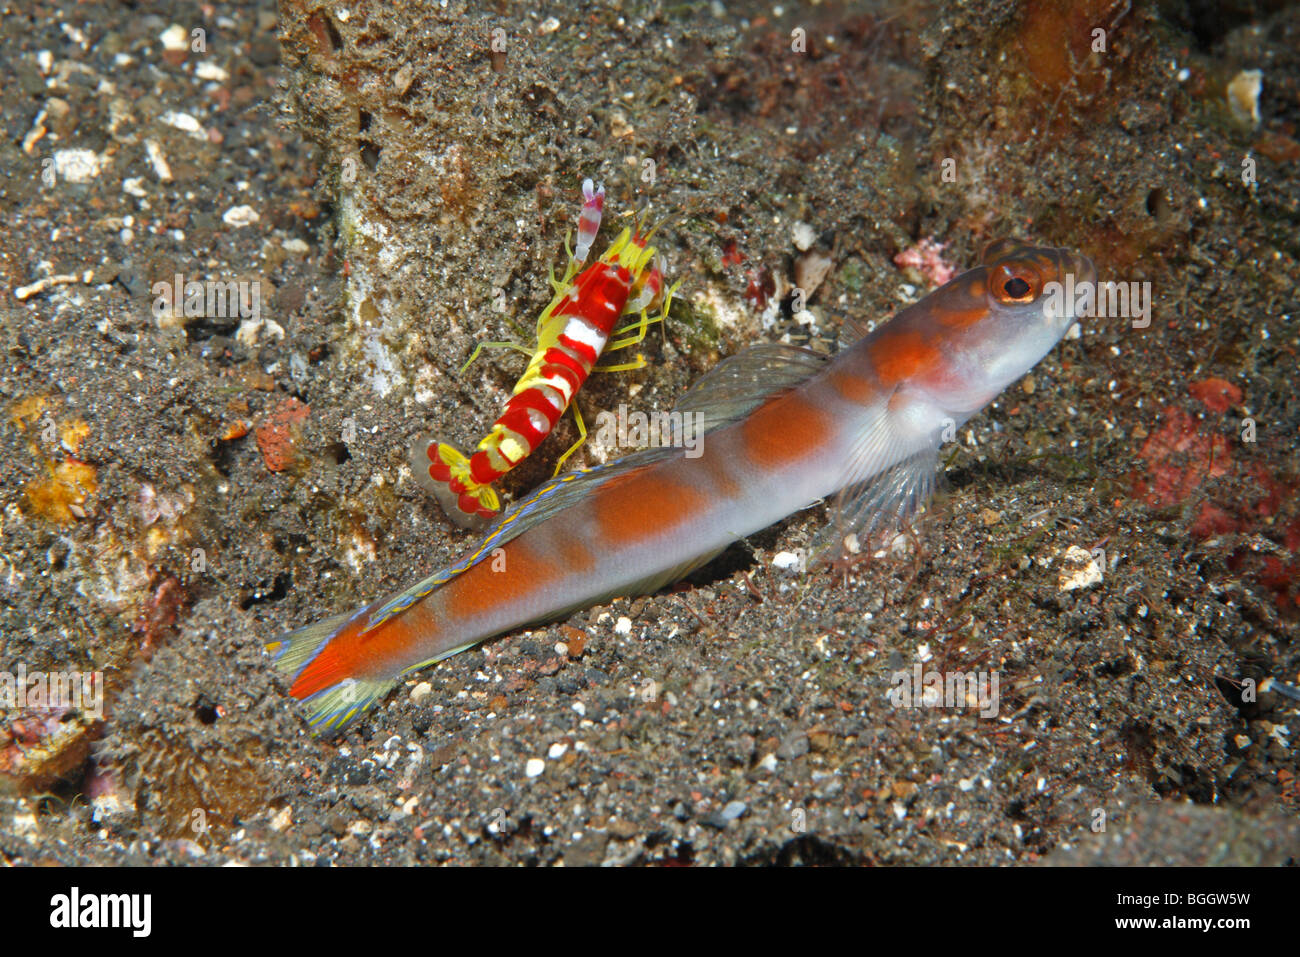 Flag-tail shrimpgoby, Amblyeleotris yanoi, and Randall's Shrimp, Alpheus randalli. Stock Photo